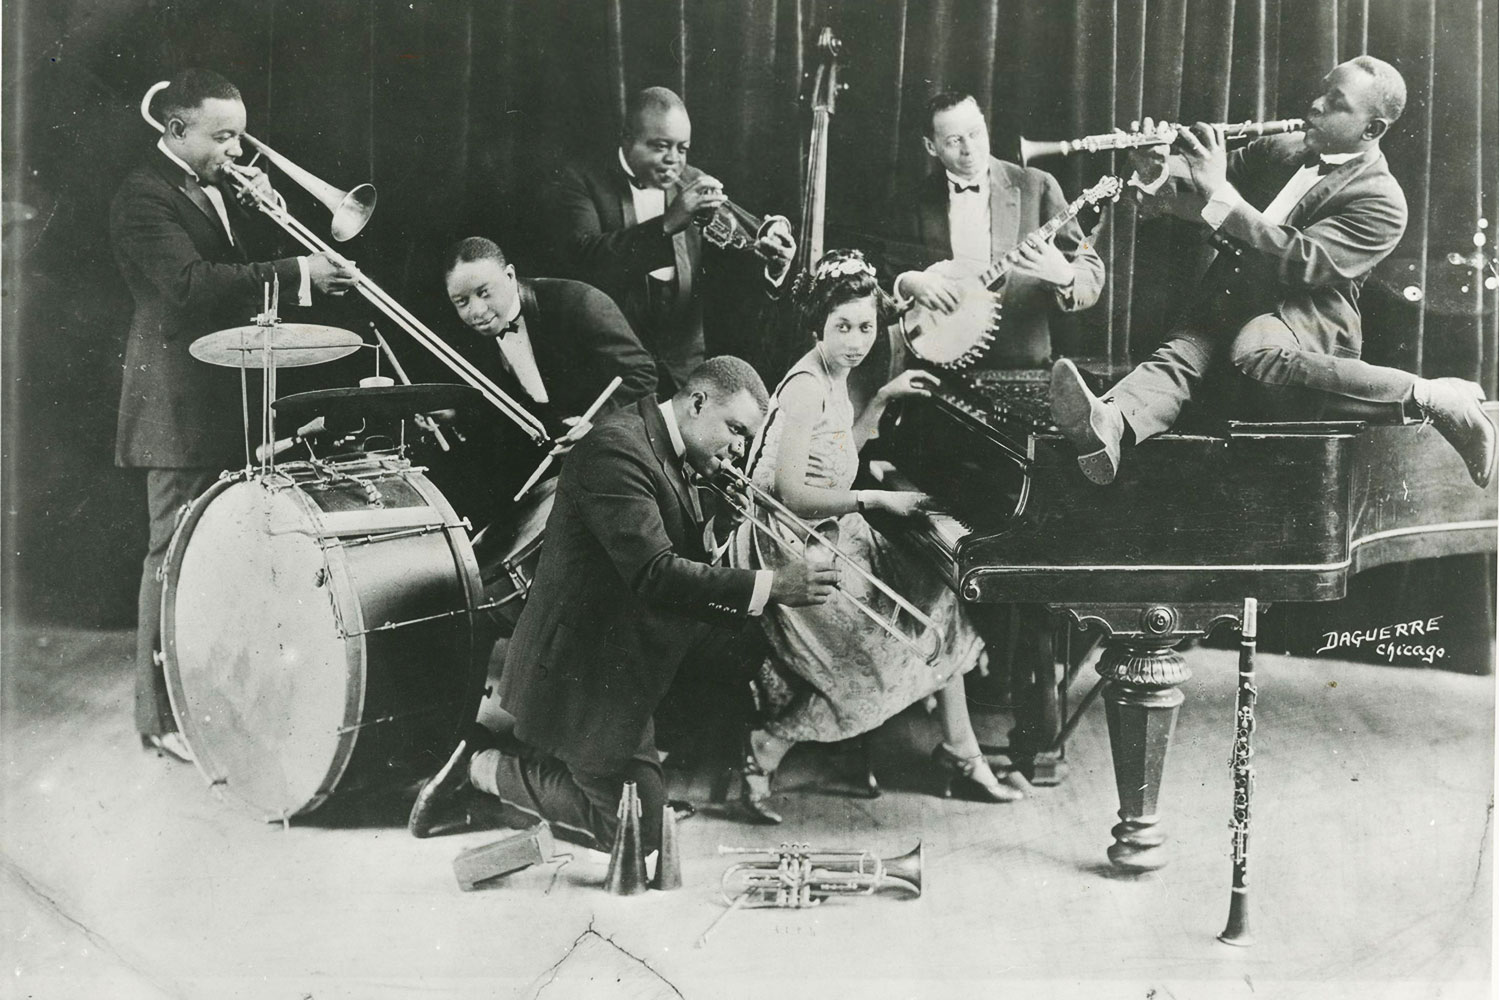 King Oliver’s Creole Jazz Band, circa 1923. Honore Dutrey, trombone; Warren “Baby” Dodds, drums; Joe Oliver, cornet; Louis Armstrong (kneeling in front), slide trumpet; Lil Hardin Armstrong, piano; Bill Johnson, banjo; Johnny Dodds, clarinet.